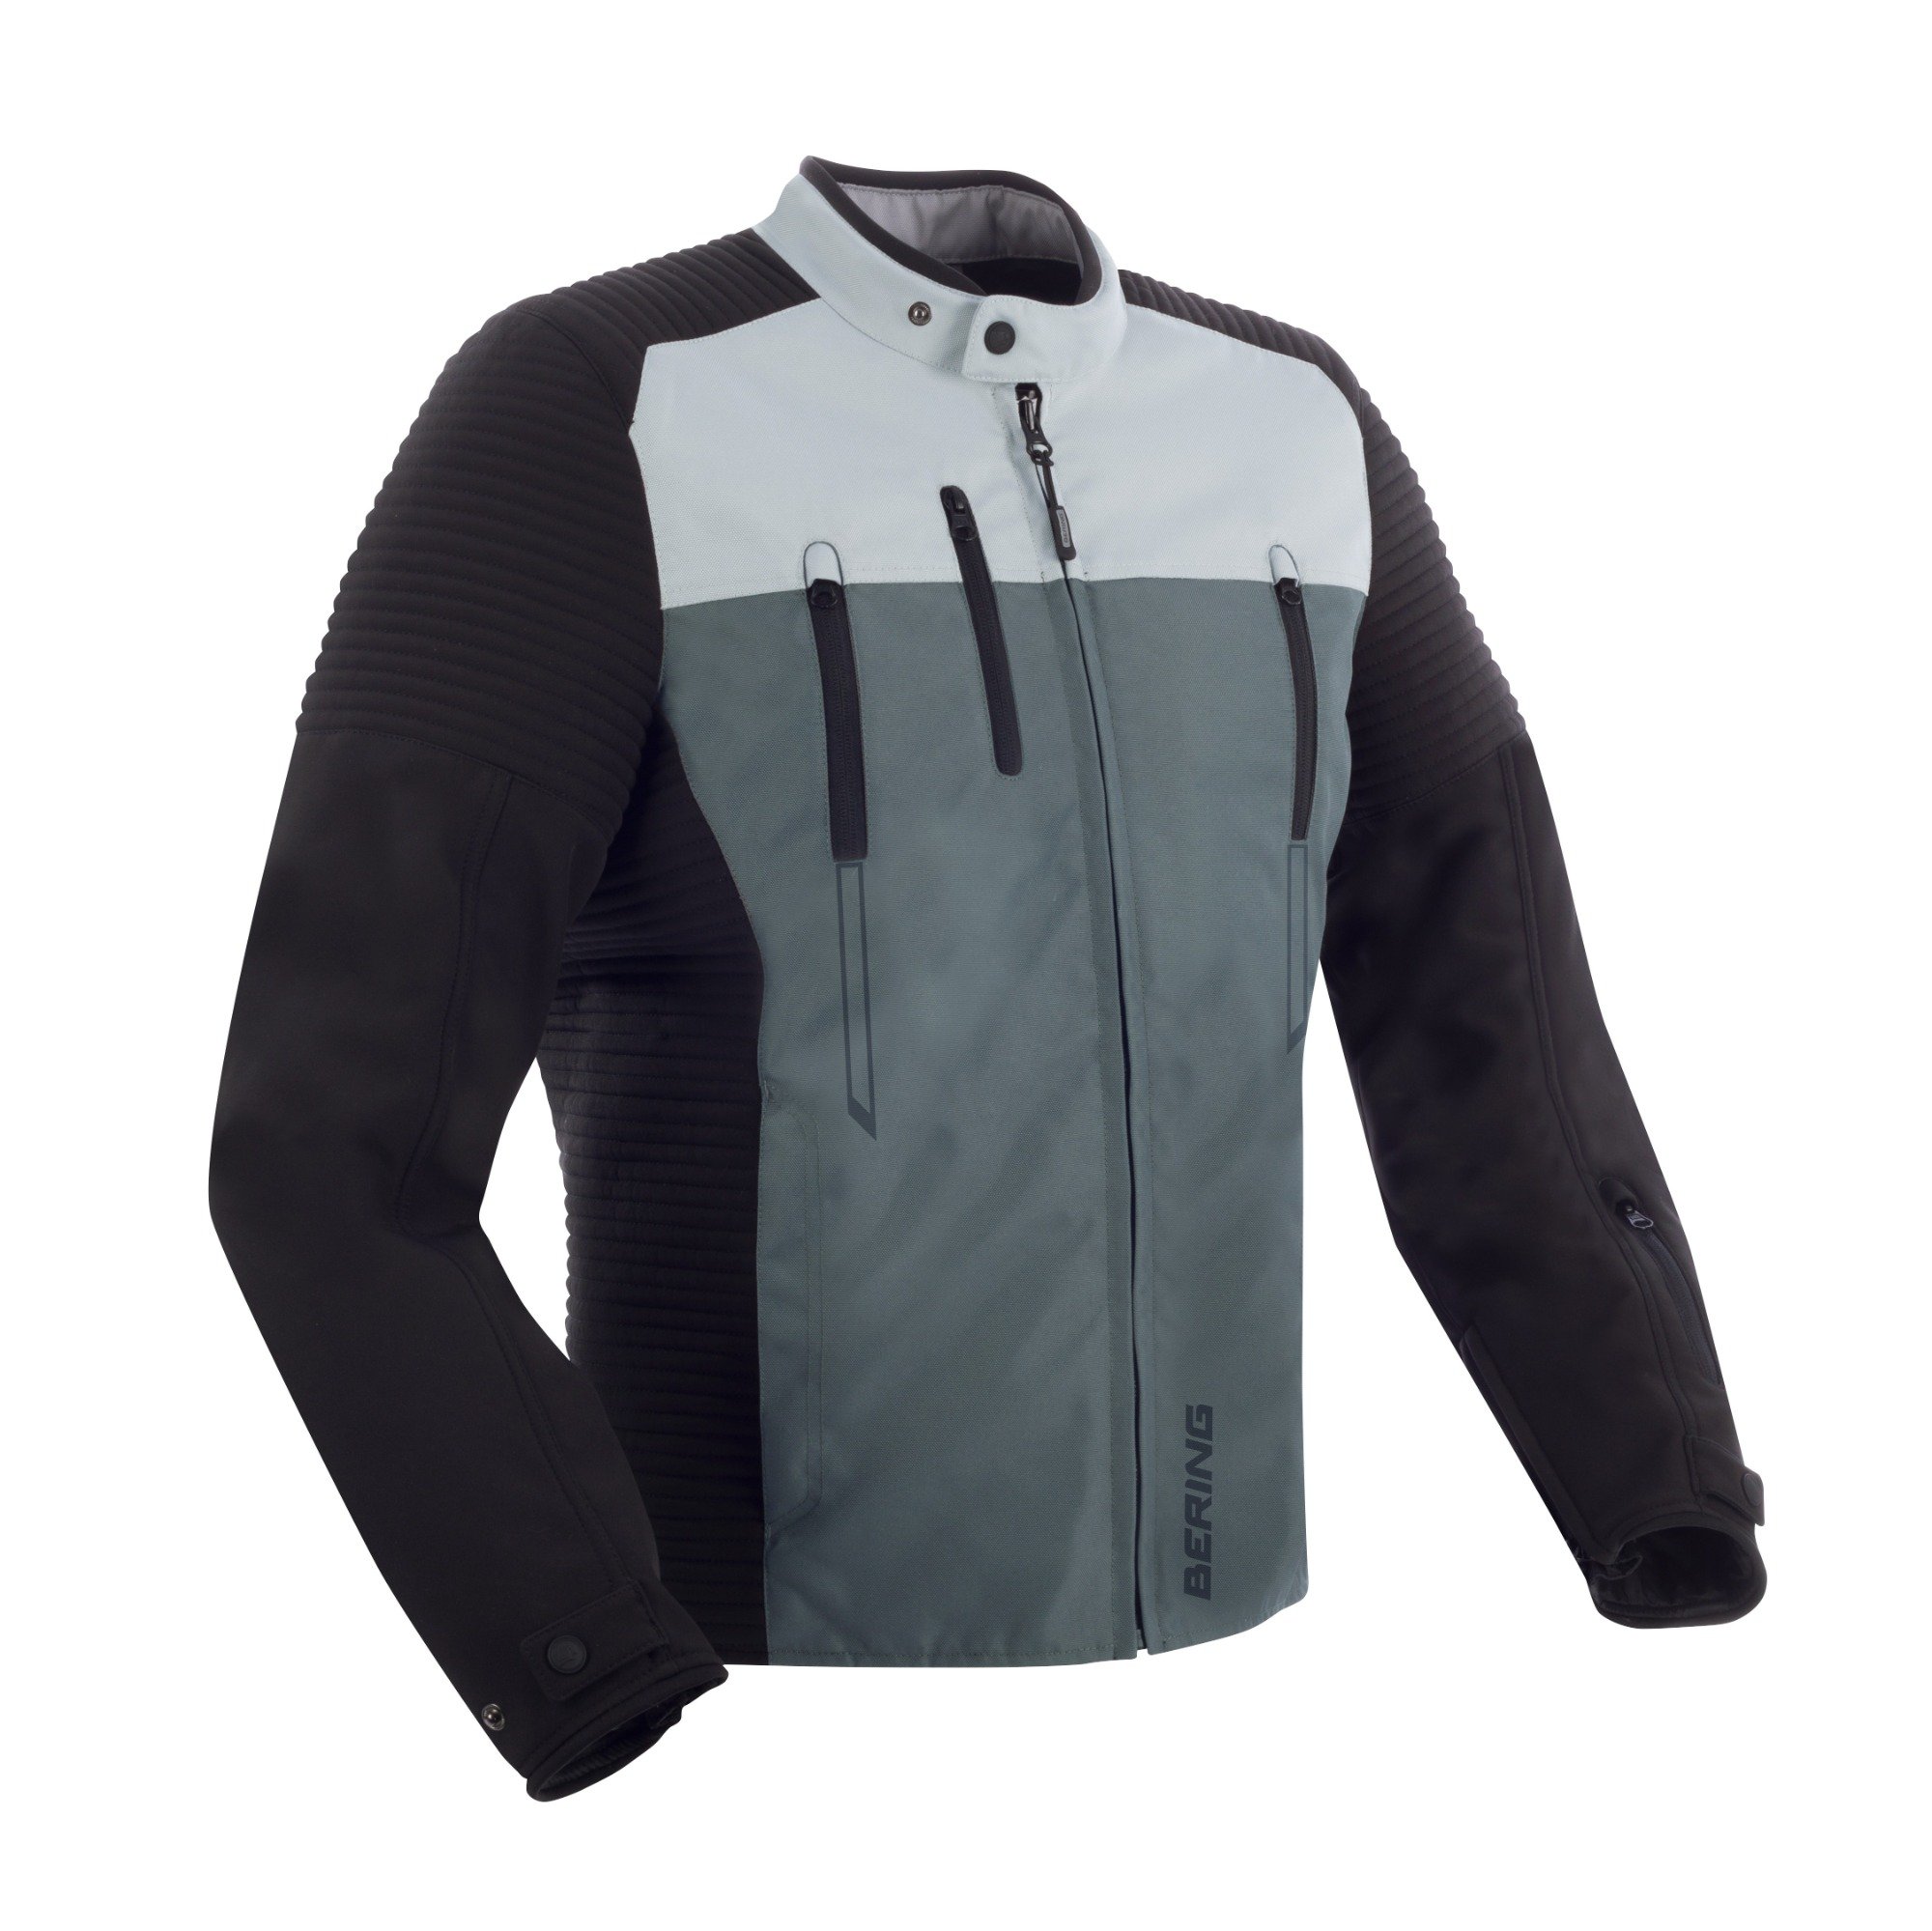 Image of Bering Crosser Jacket Gray Black Size 3XL ID 3660815169025